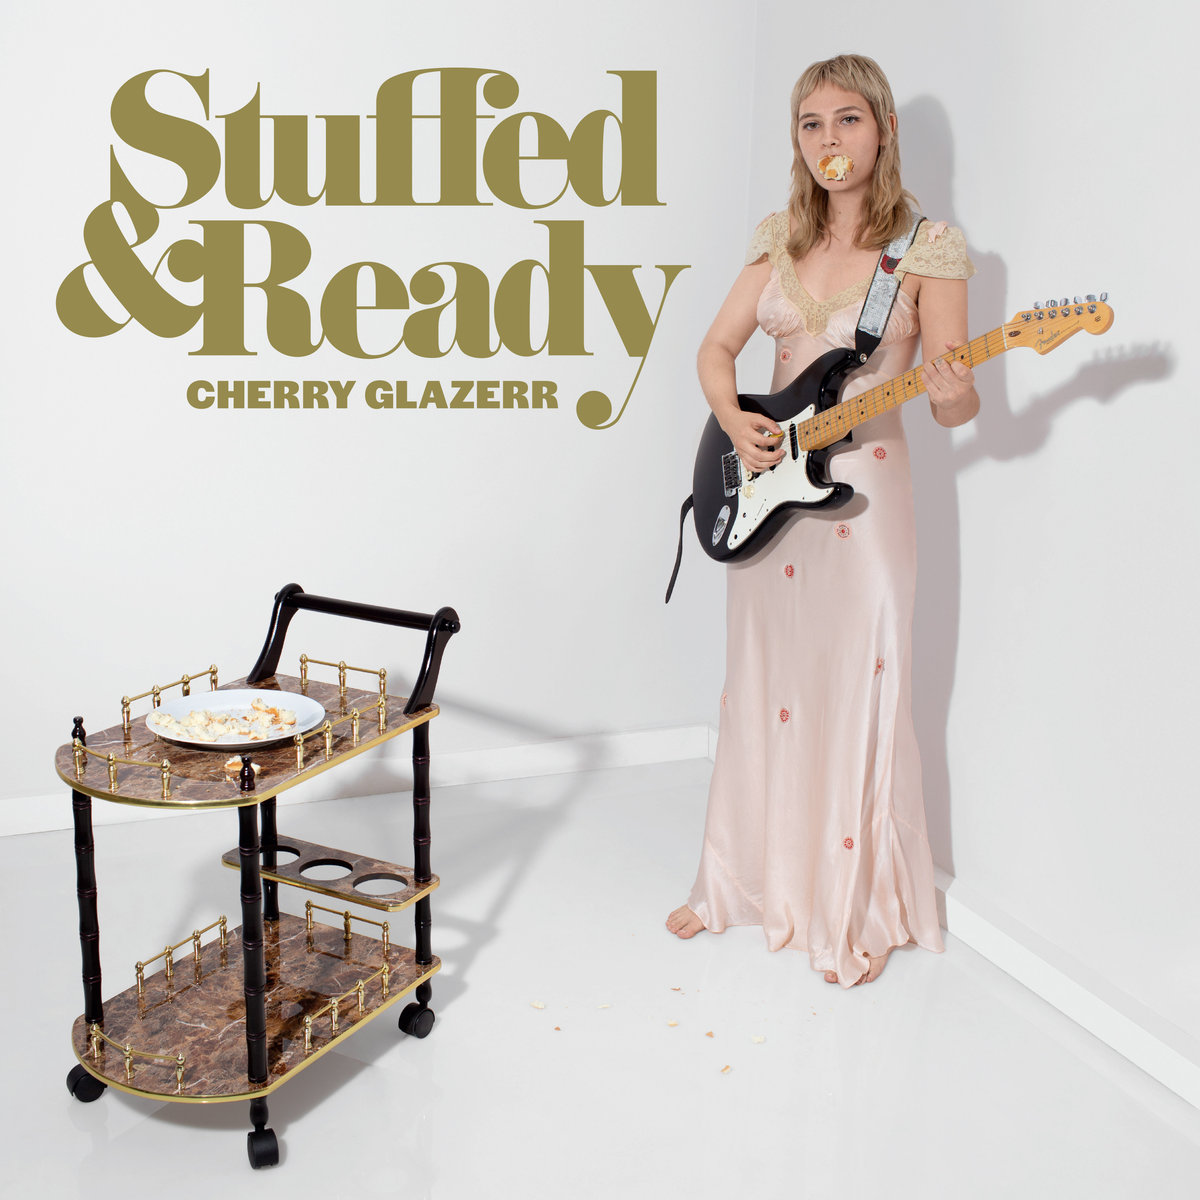 Cherry Glazerr’s Clementine Creevy rolls her eyes on Stuffed & Ready